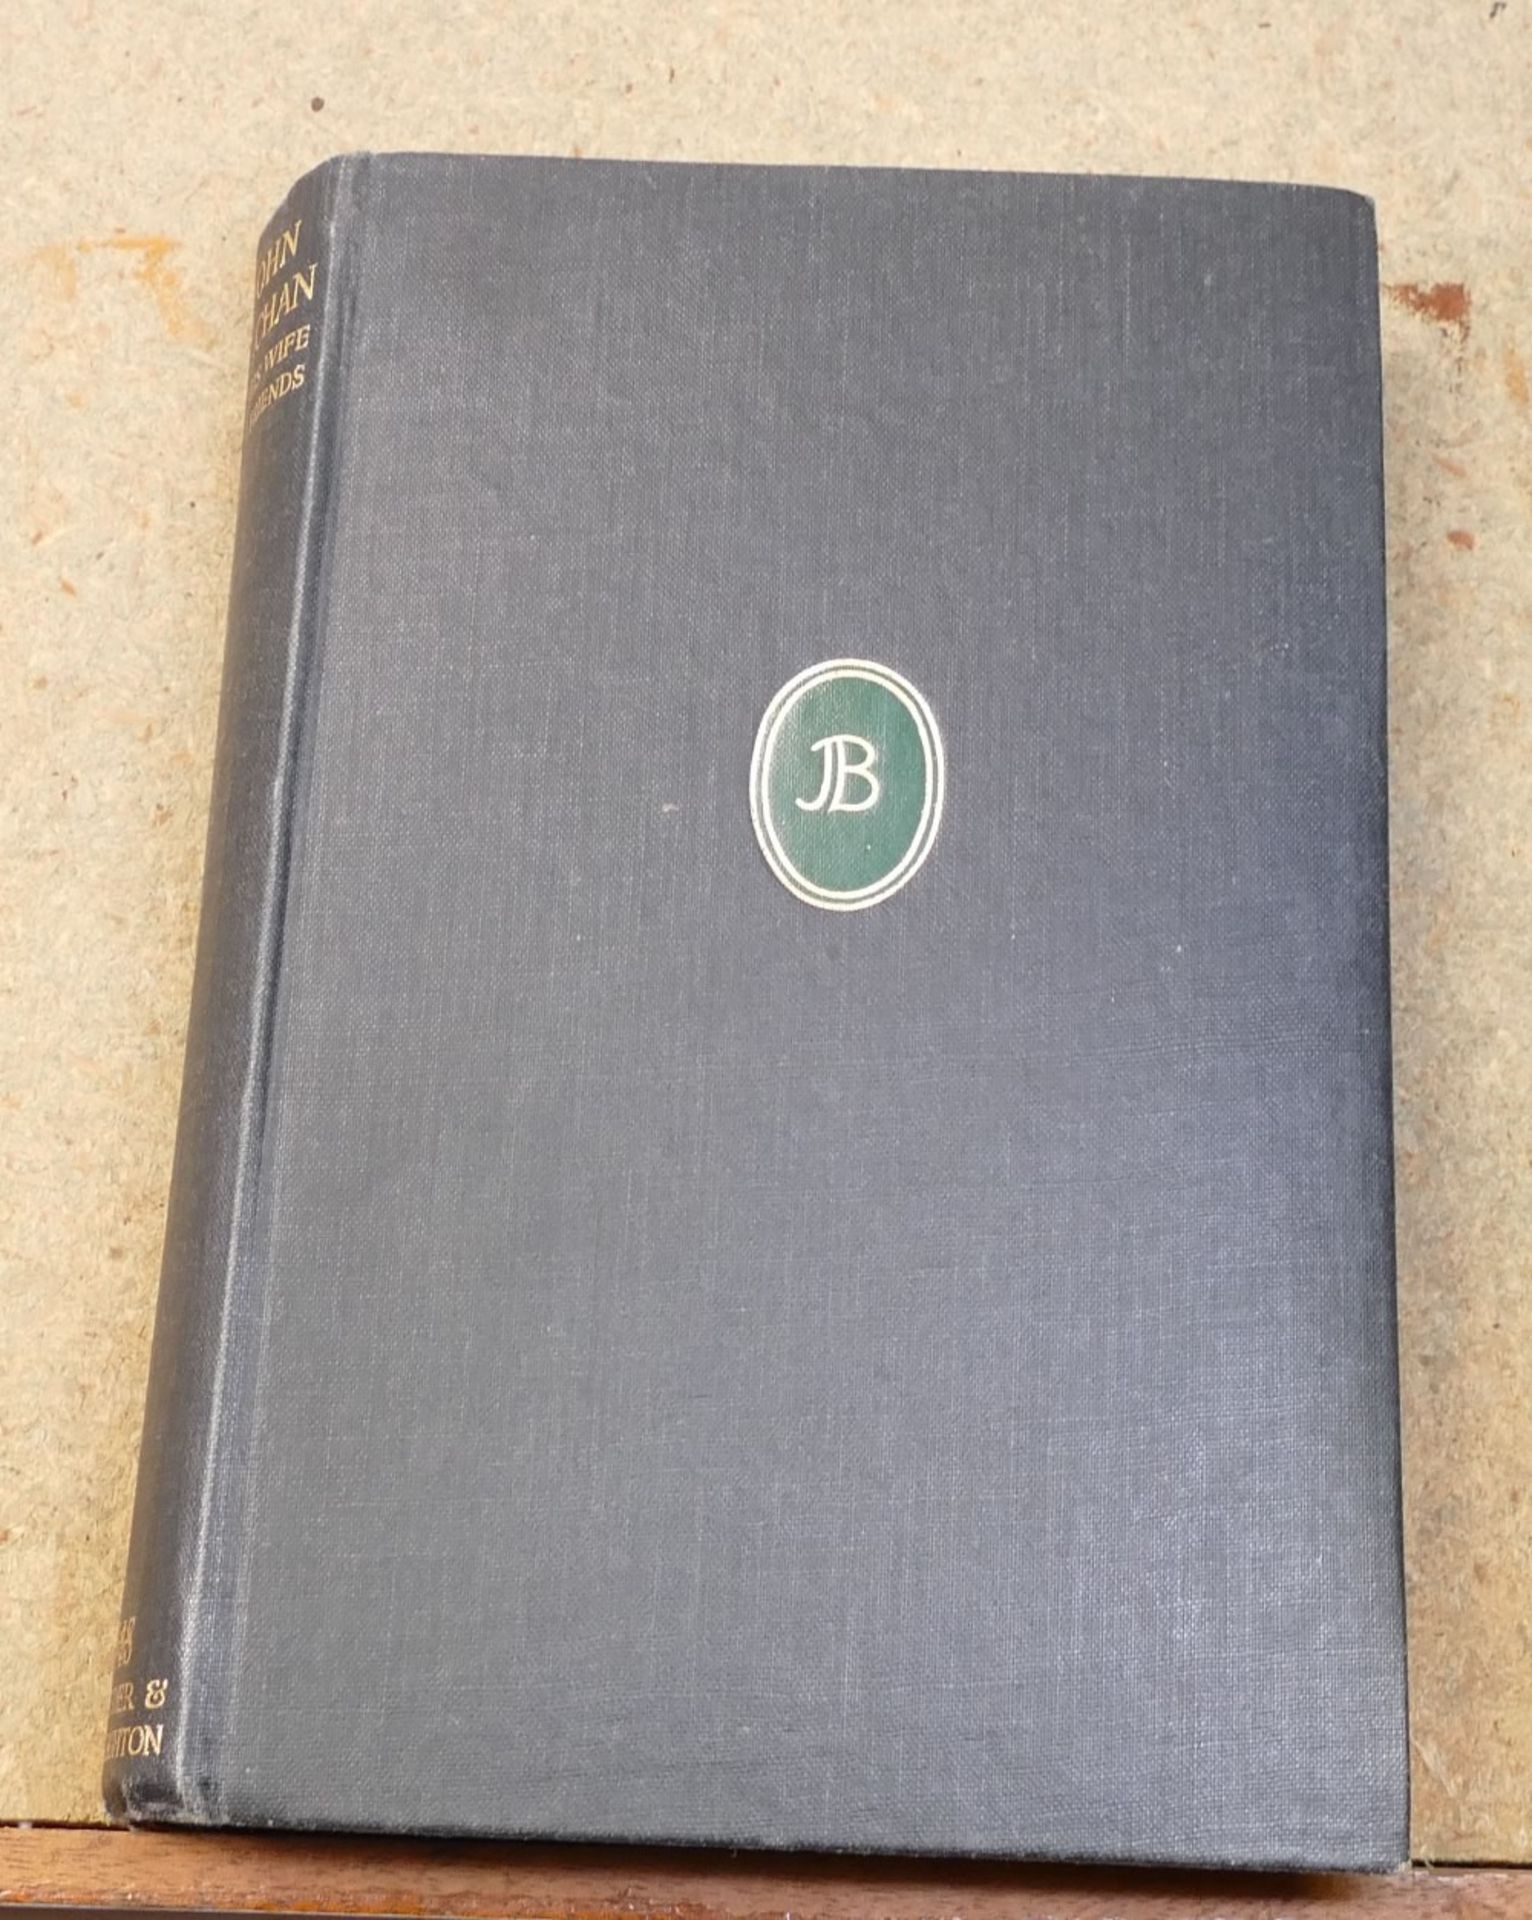 Six x 1st edition books by John Buchan - Sir Walter Scott 1932, Prester John 1910 (slight a/f), - Image 13 of 18